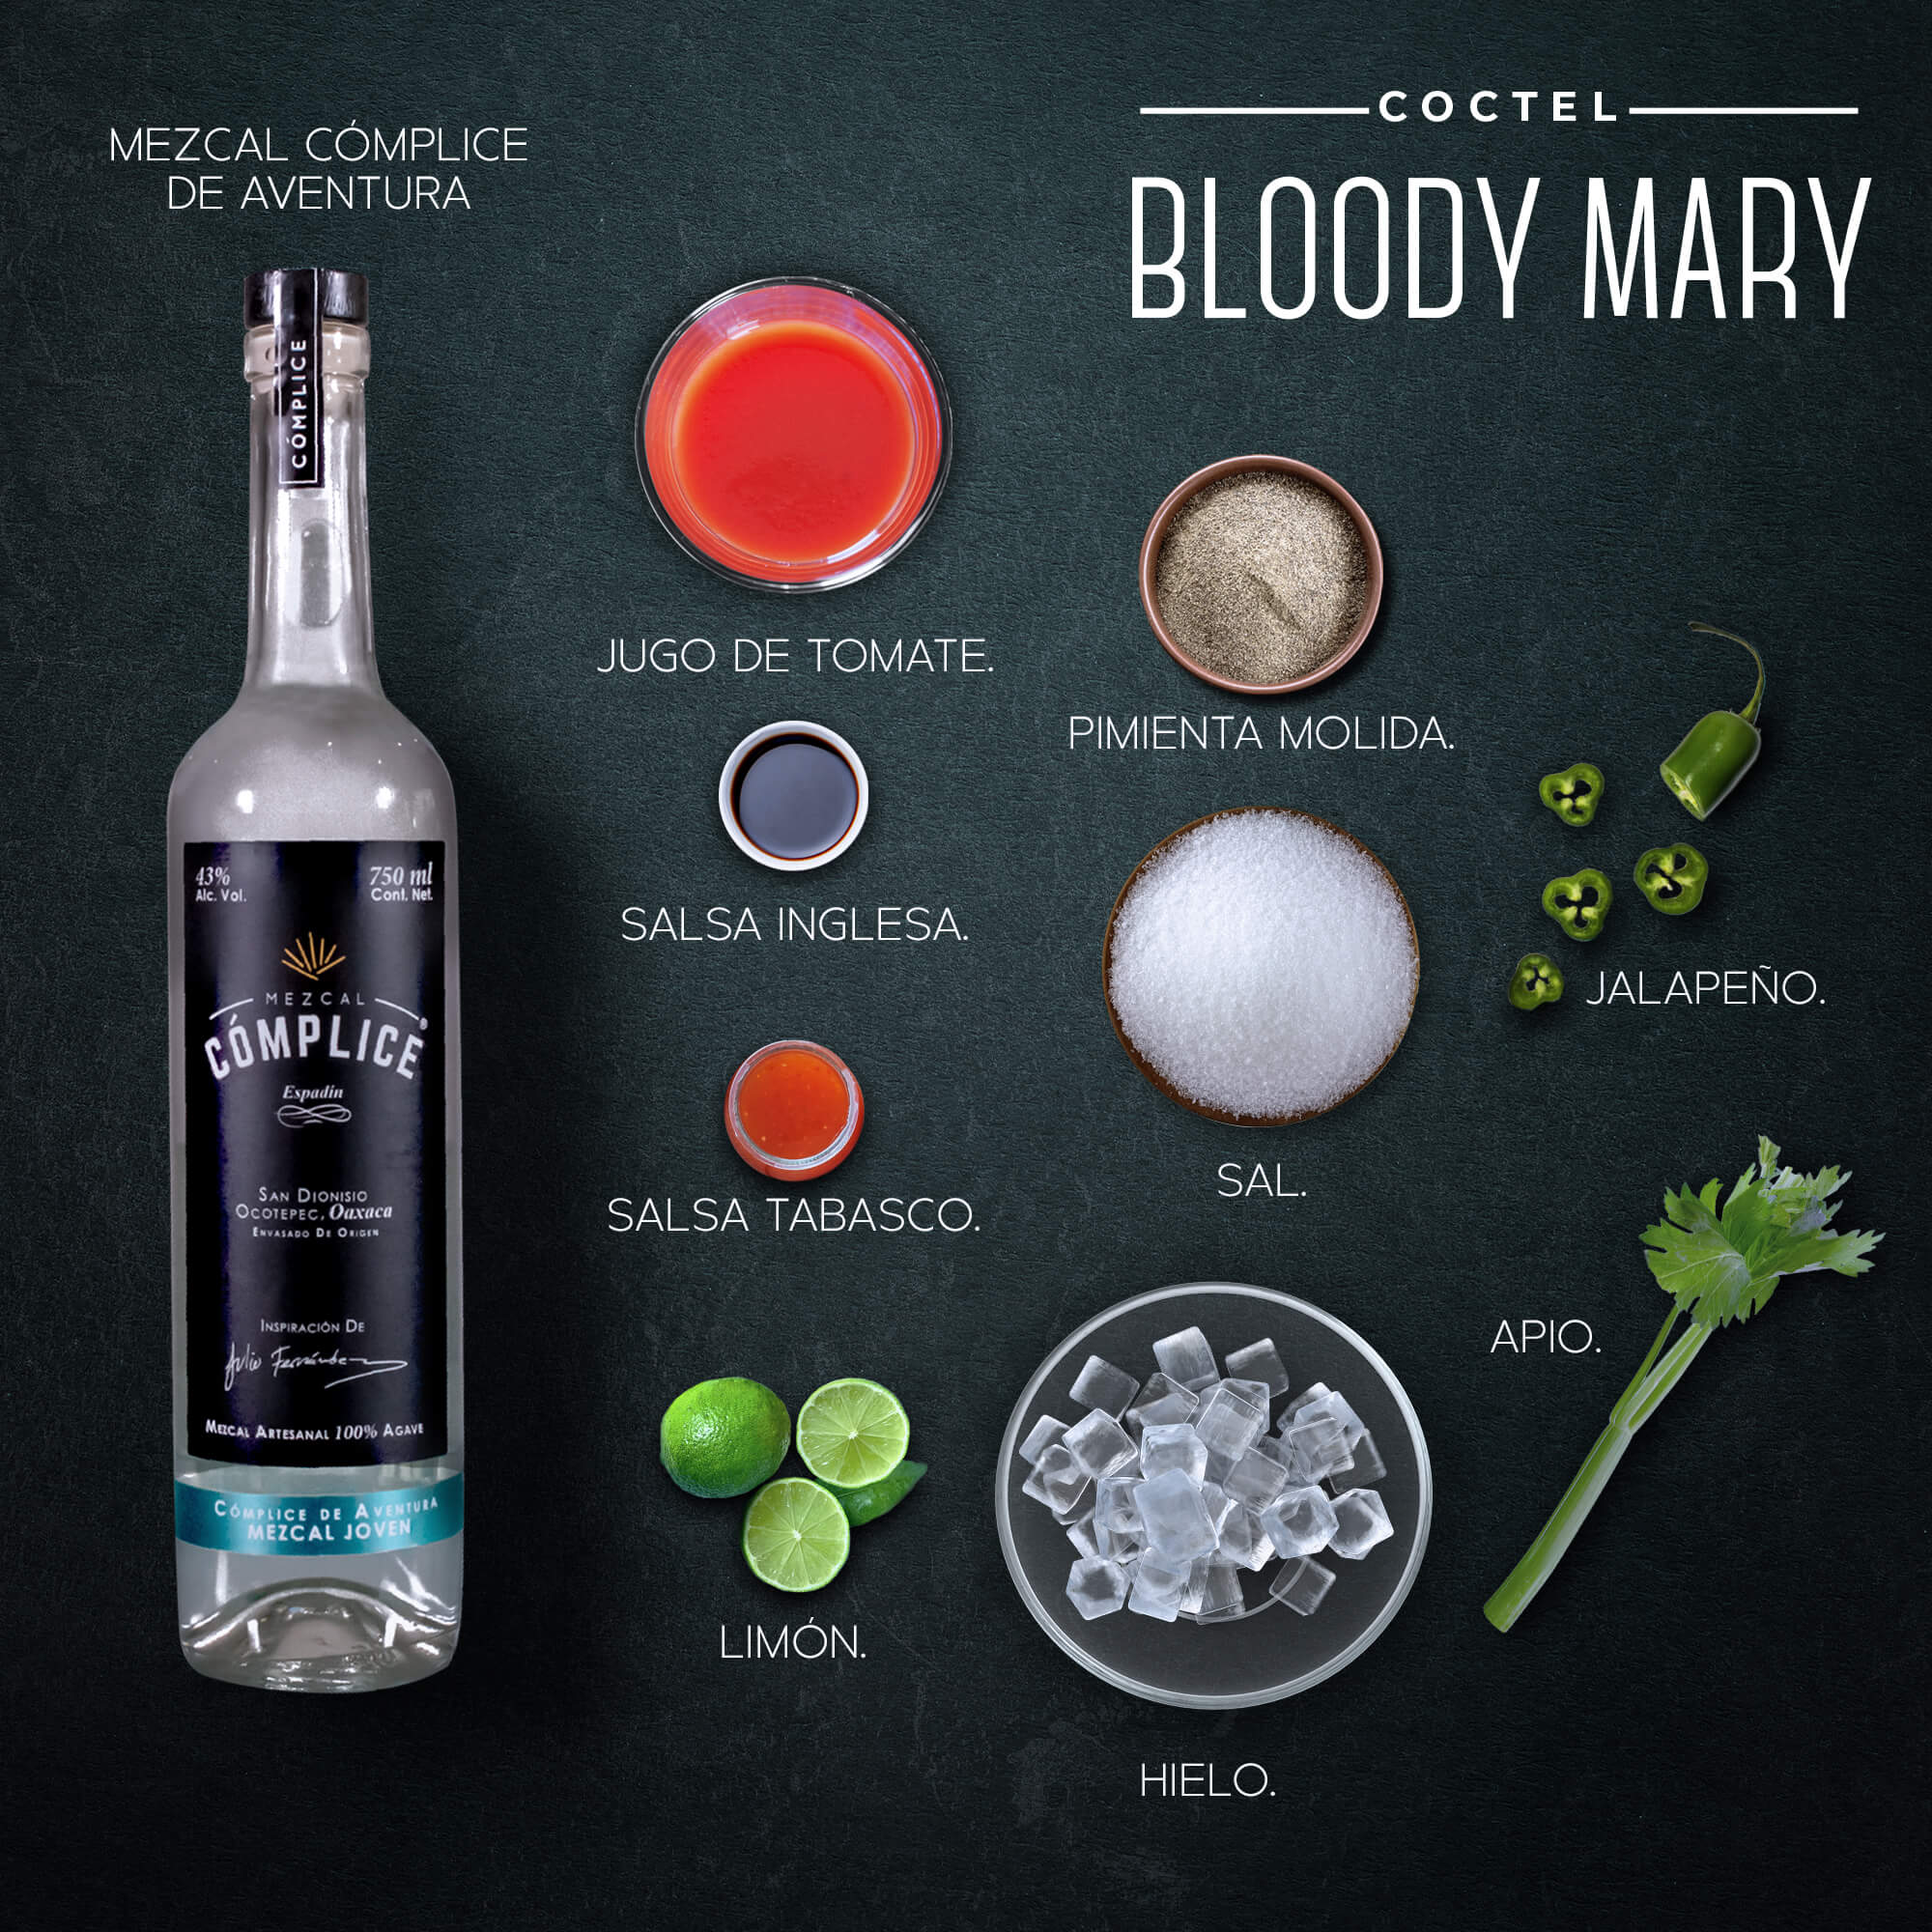 Coctel Bloody Mary Mezcal - MezcalComplice